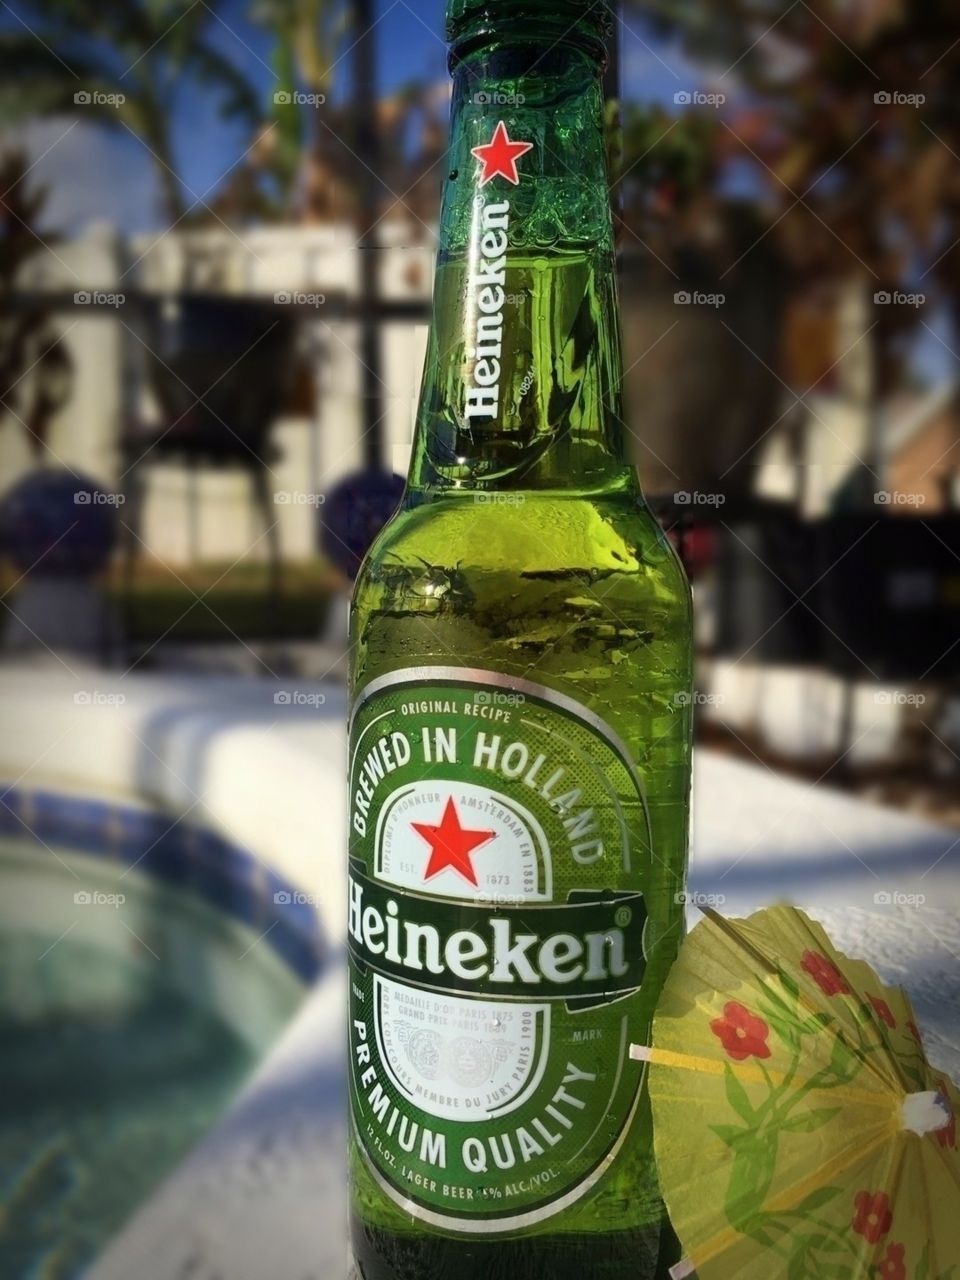 Heineken bottled beer with yellow mini umbrella by the pool